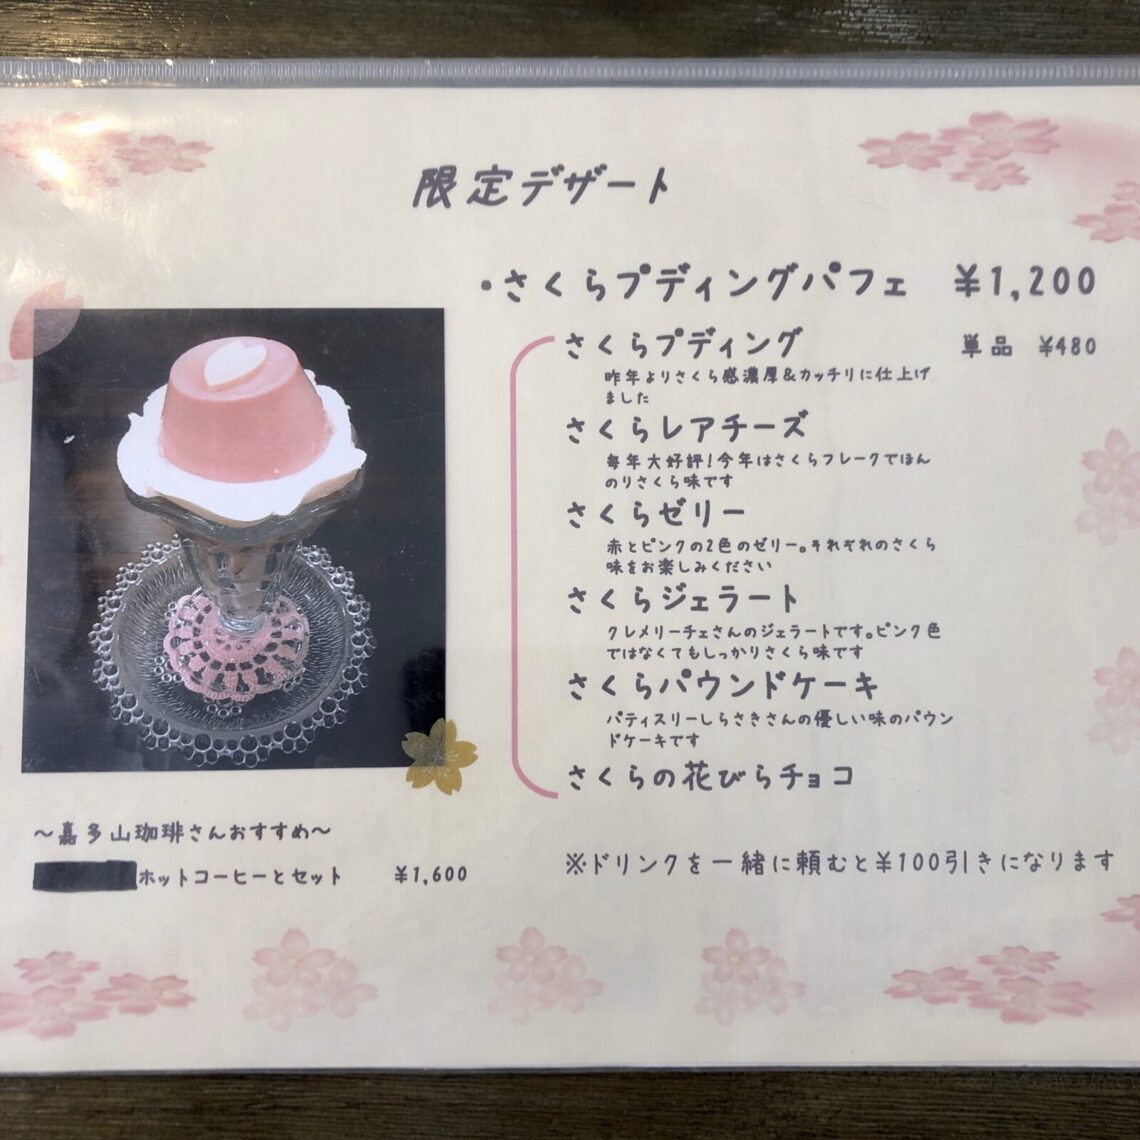 Pudding Maruyama sakura pudding